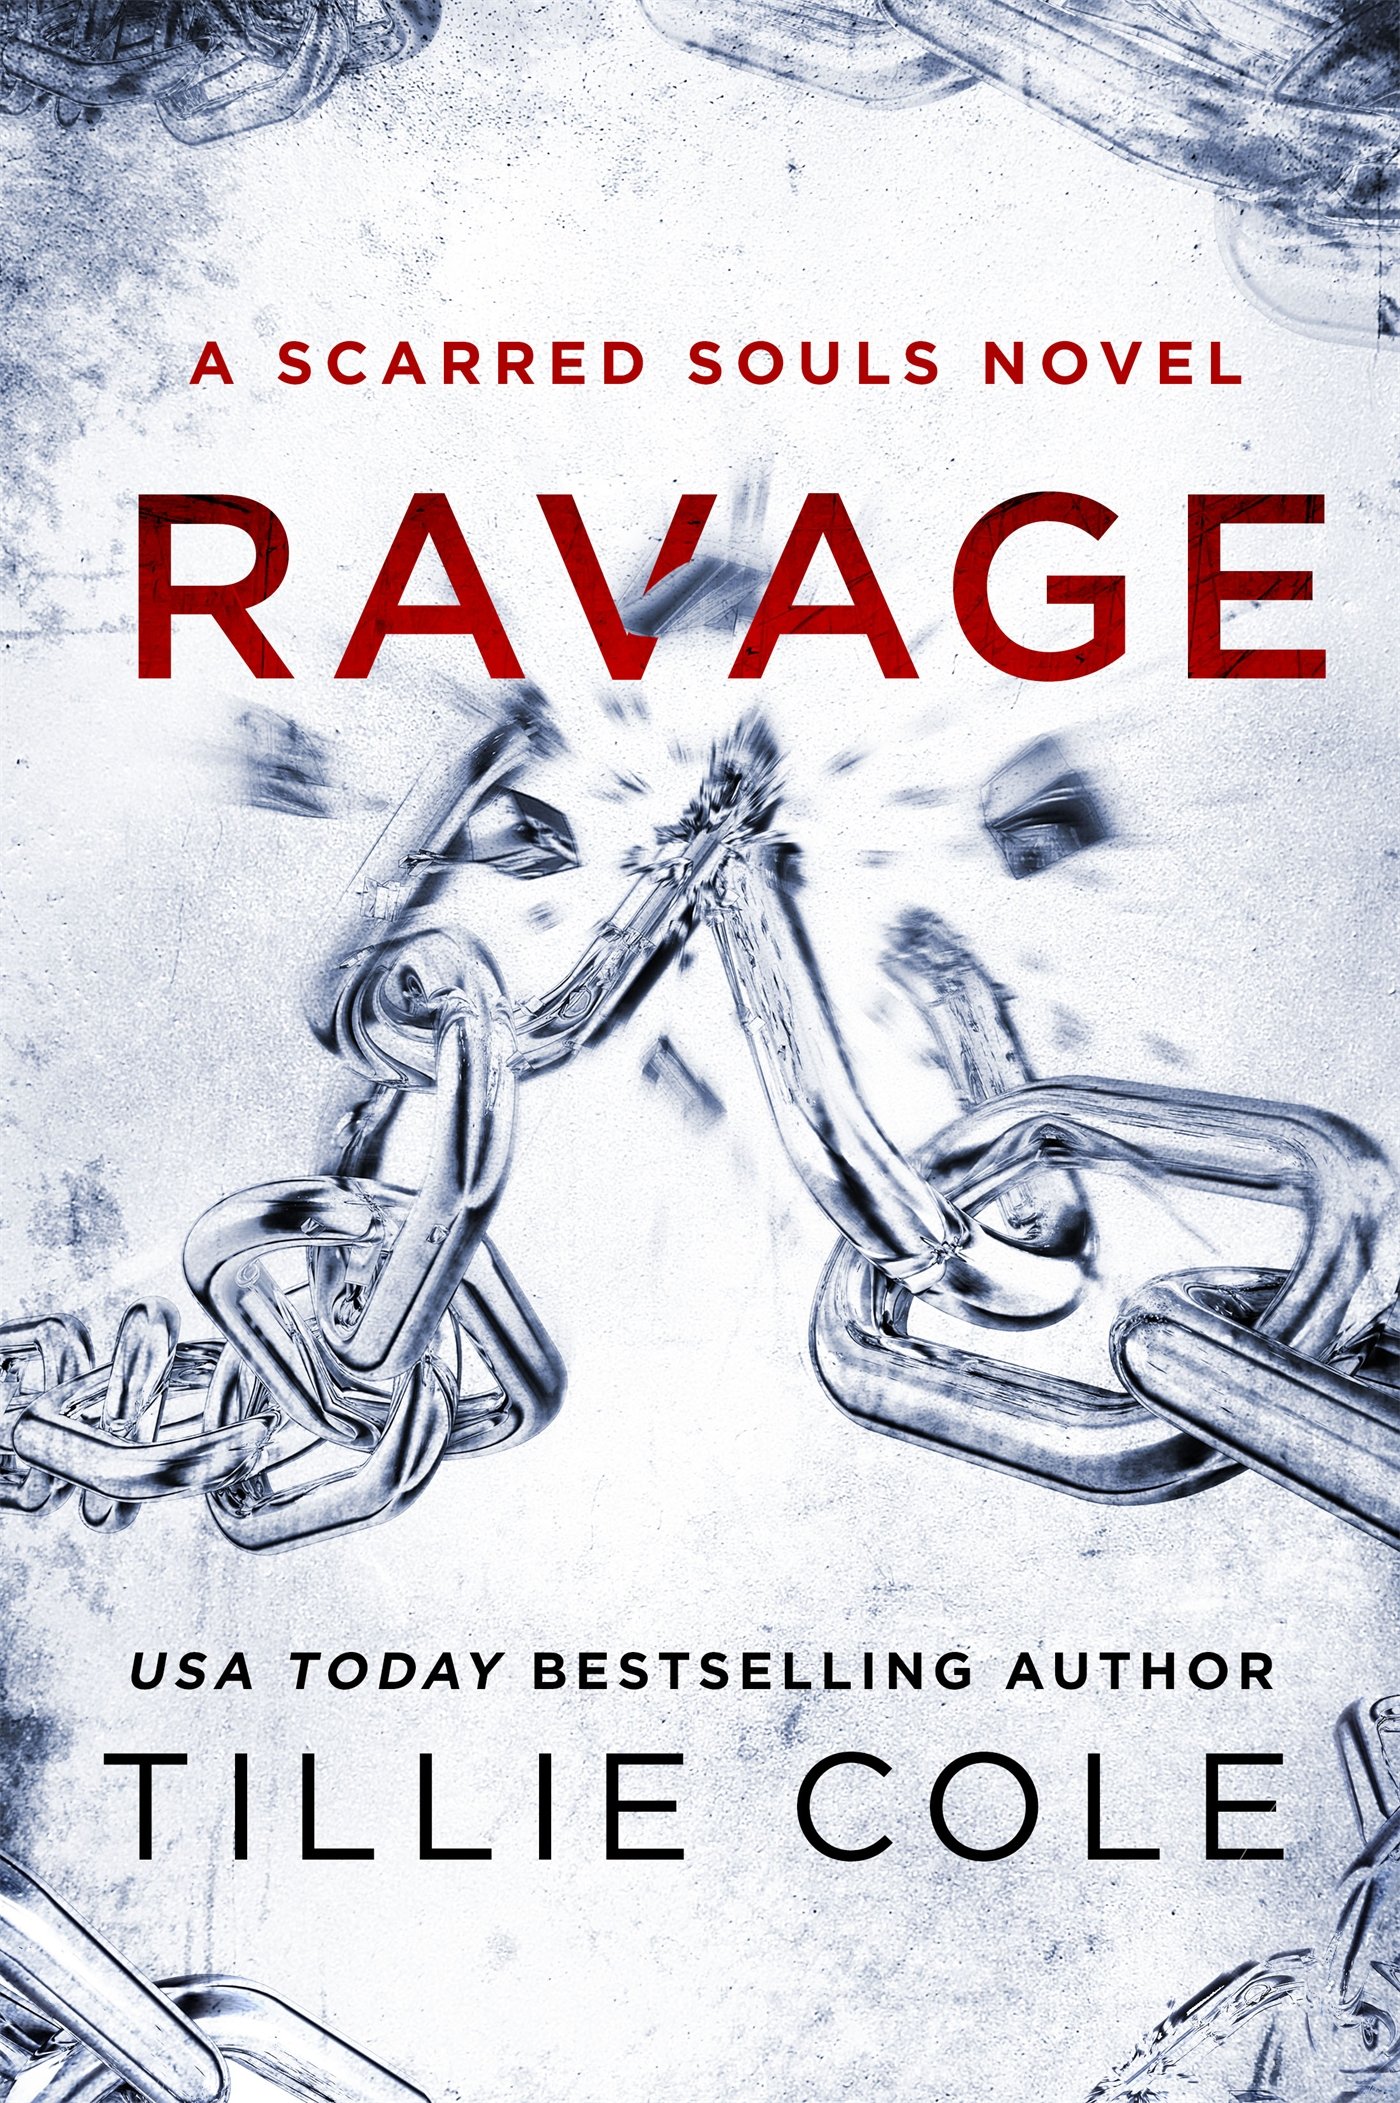 Ravage: A Scarred Souls Novel